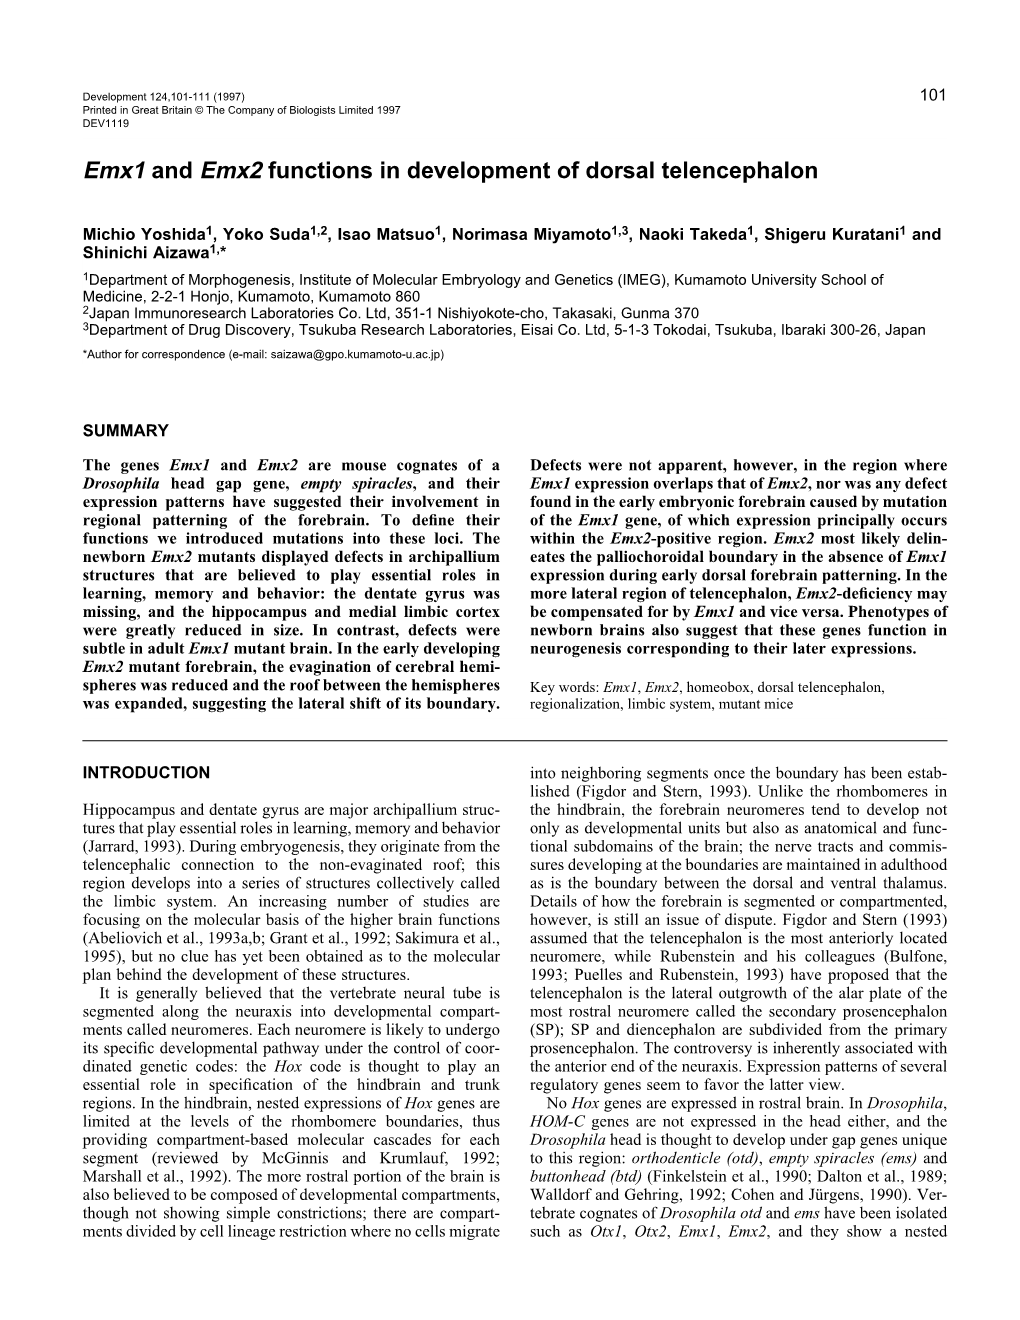 Emx1 and Emx2 Functions in Development of Dorsal Telencephalon